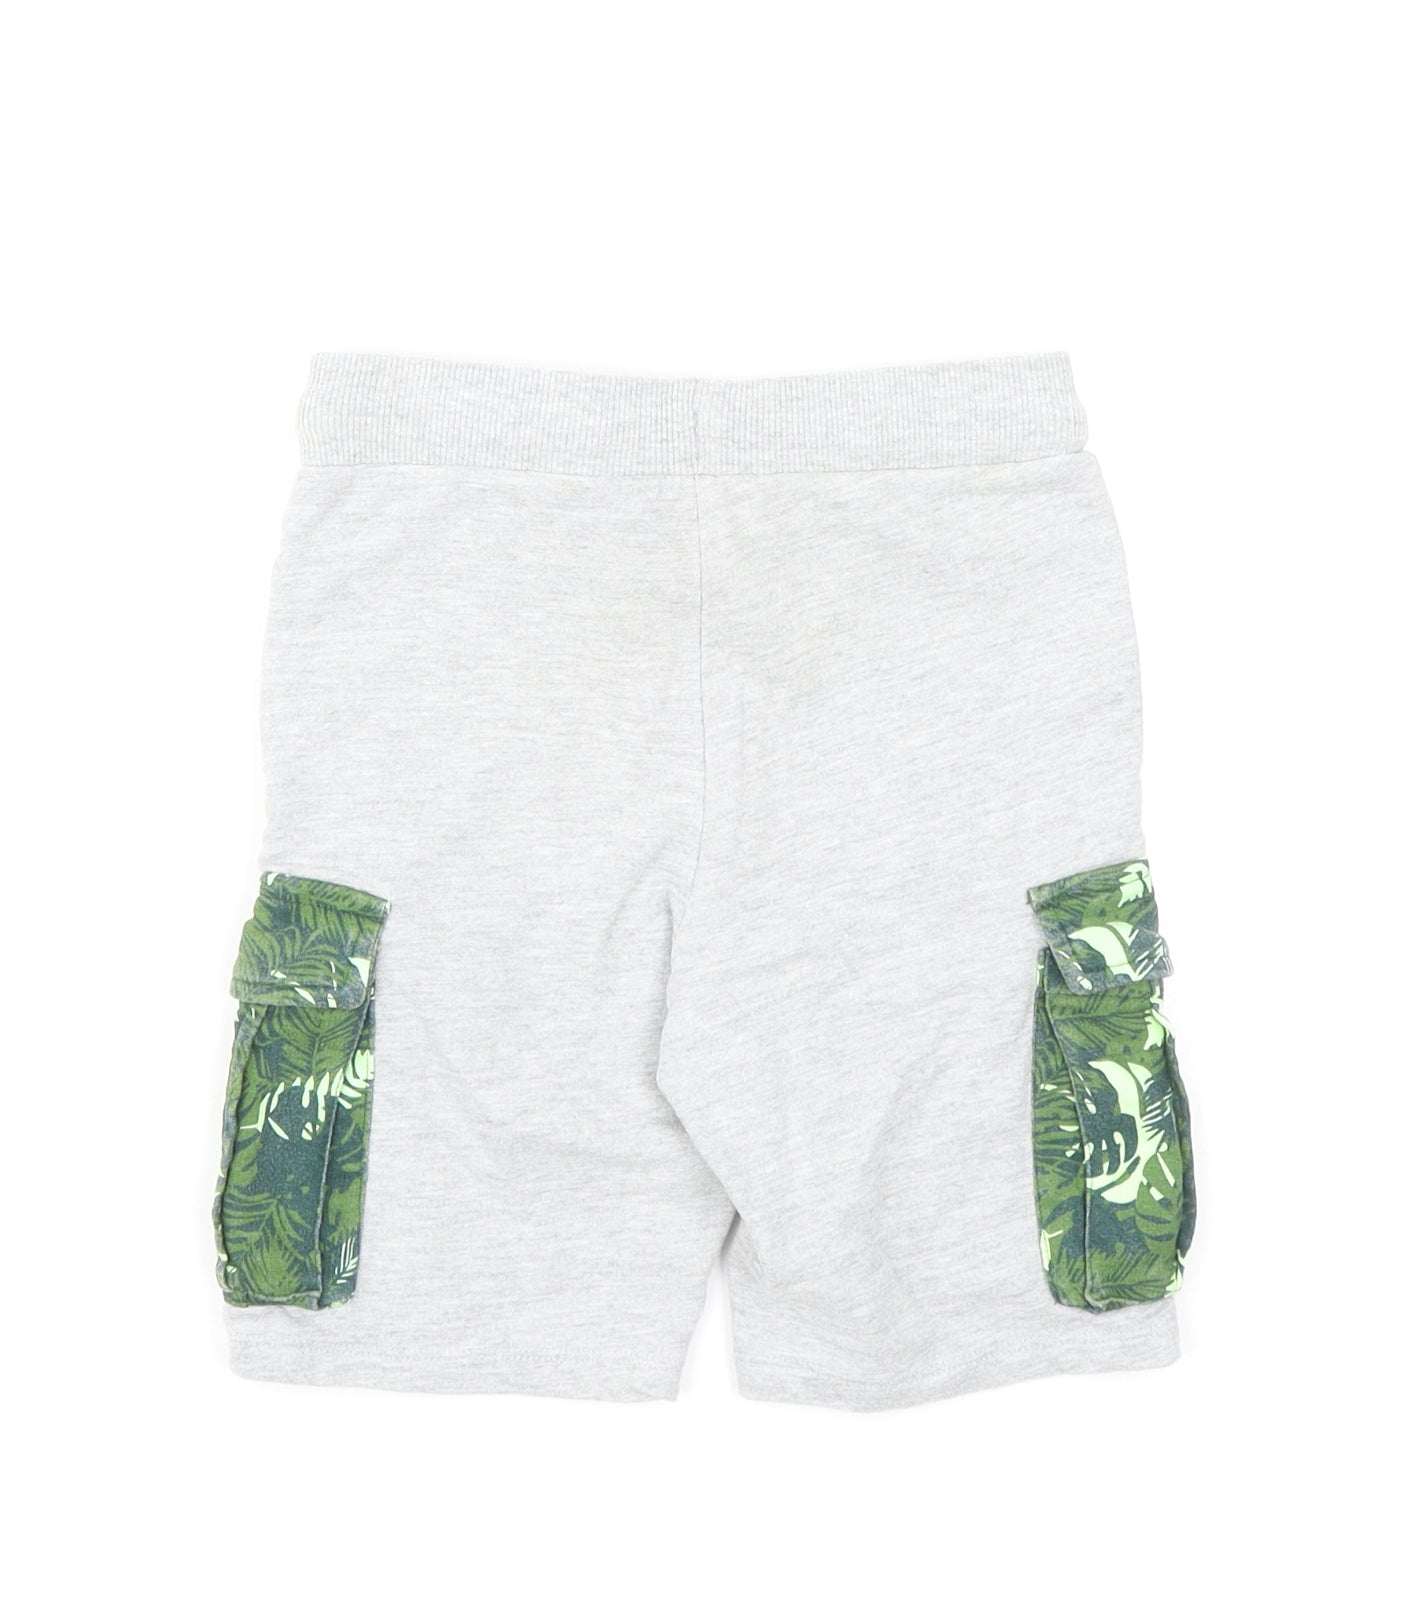 Little Kids Boys Grey Cotton Sweat Shorts Size 3-4 Years L6.5 in Regular Drawstring - Short length